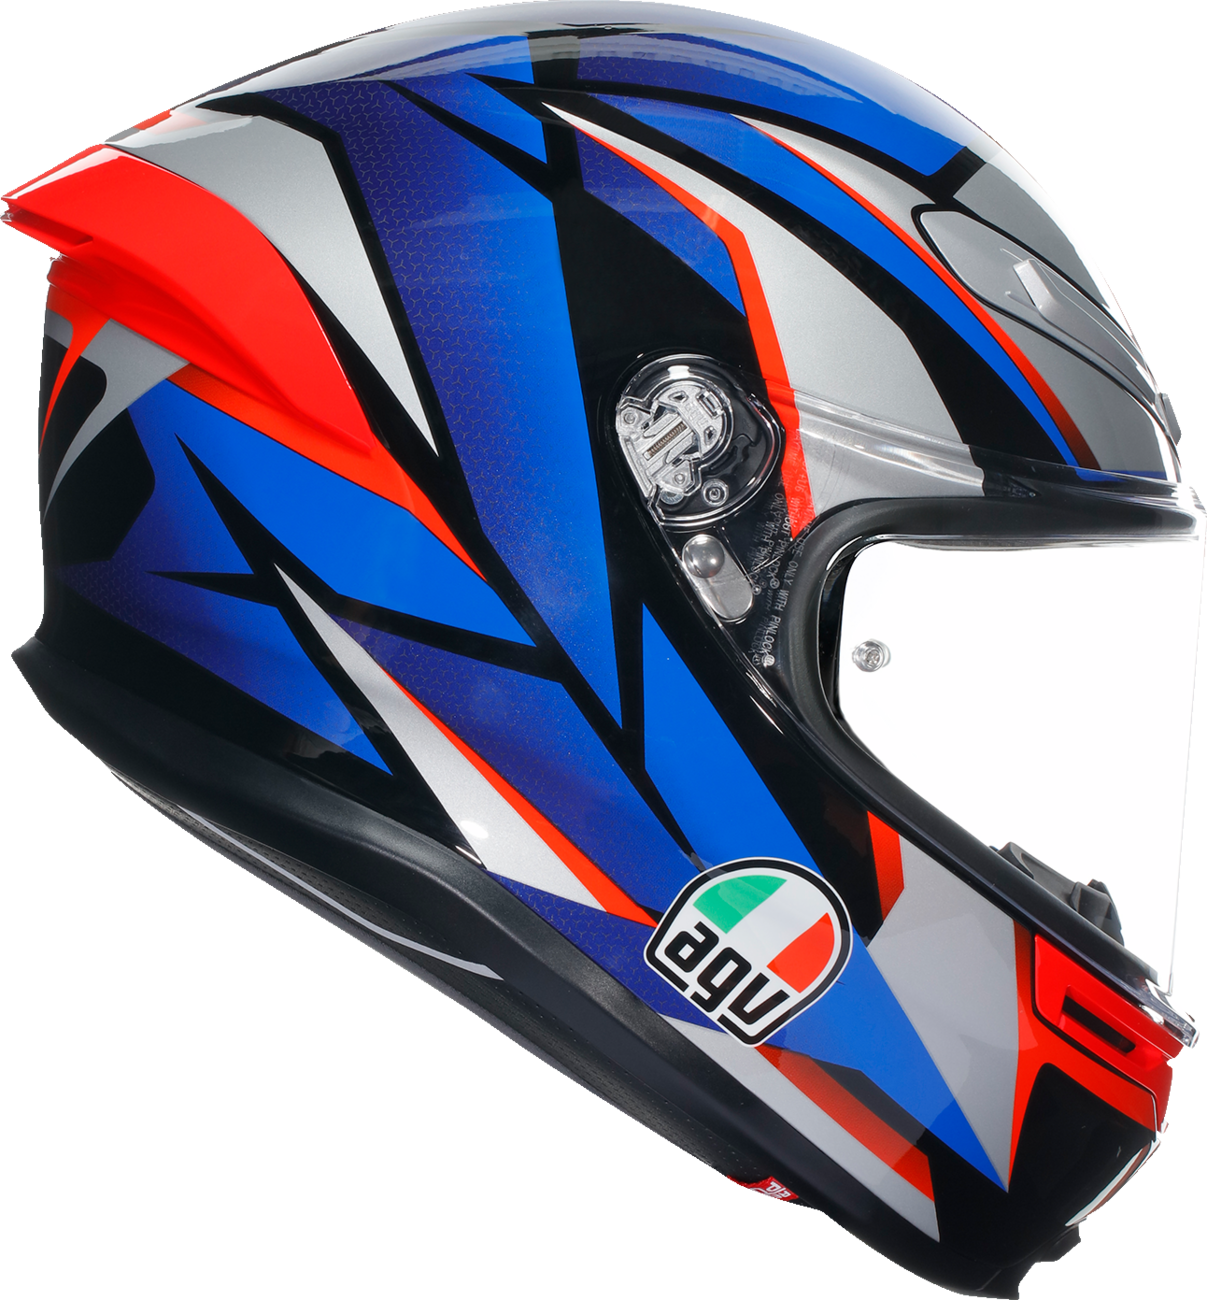 AGV K6 S Helmet - Slashcut - Black/Blue/Red - 2XL 21183950020152X